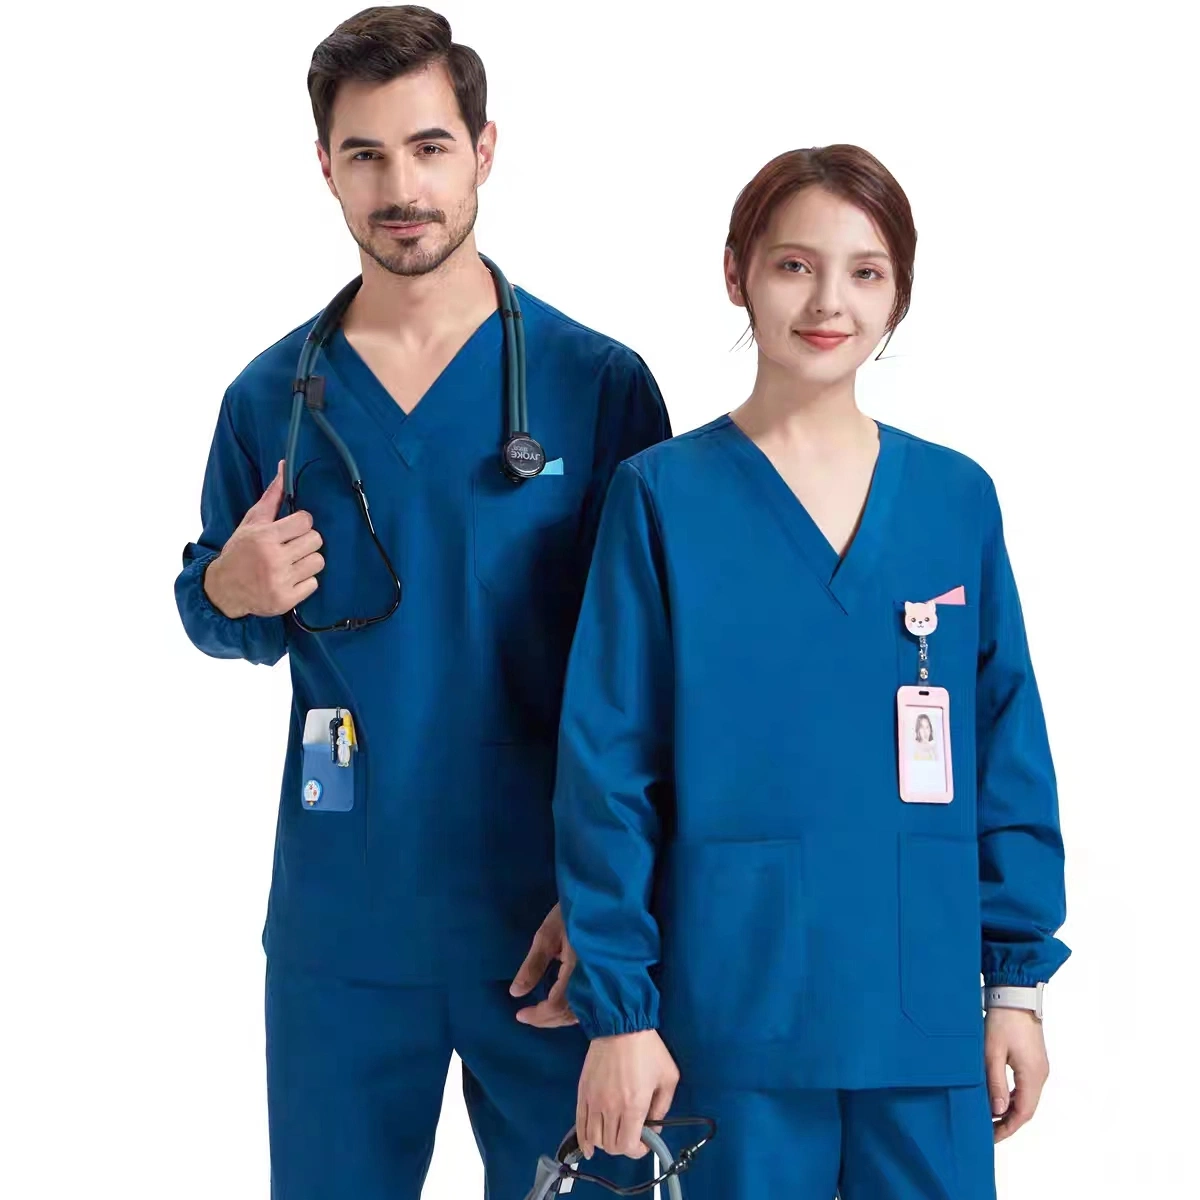 Fitted Hospital Uniforms Hospital Uniforms Uniformes De Hospital Hospital Jacket